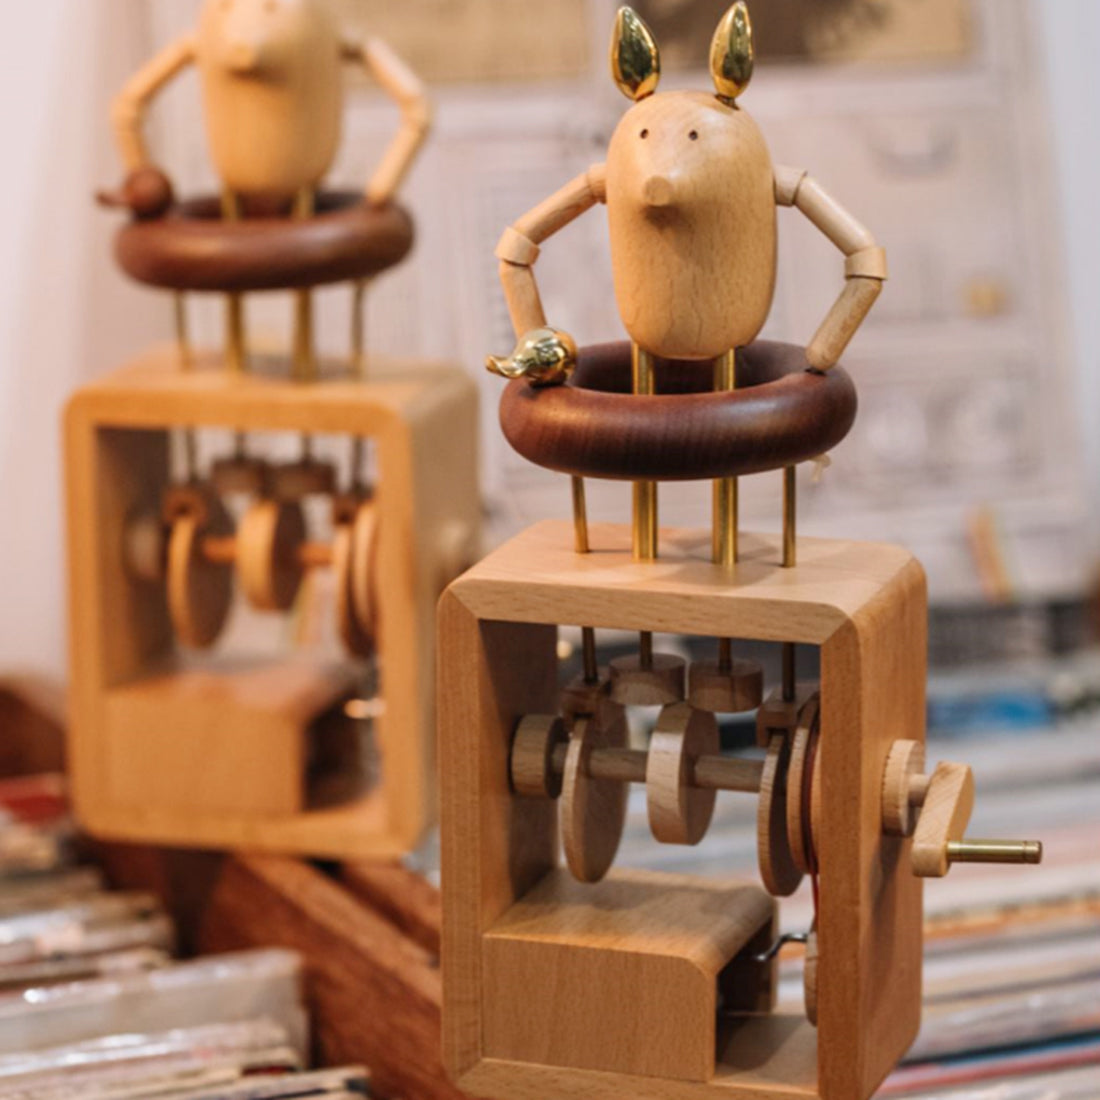 Automata Creative Gift Handmade Wooden Music Box Cute Dynamic Hand Cranked Music Box - Swim Ring Pig